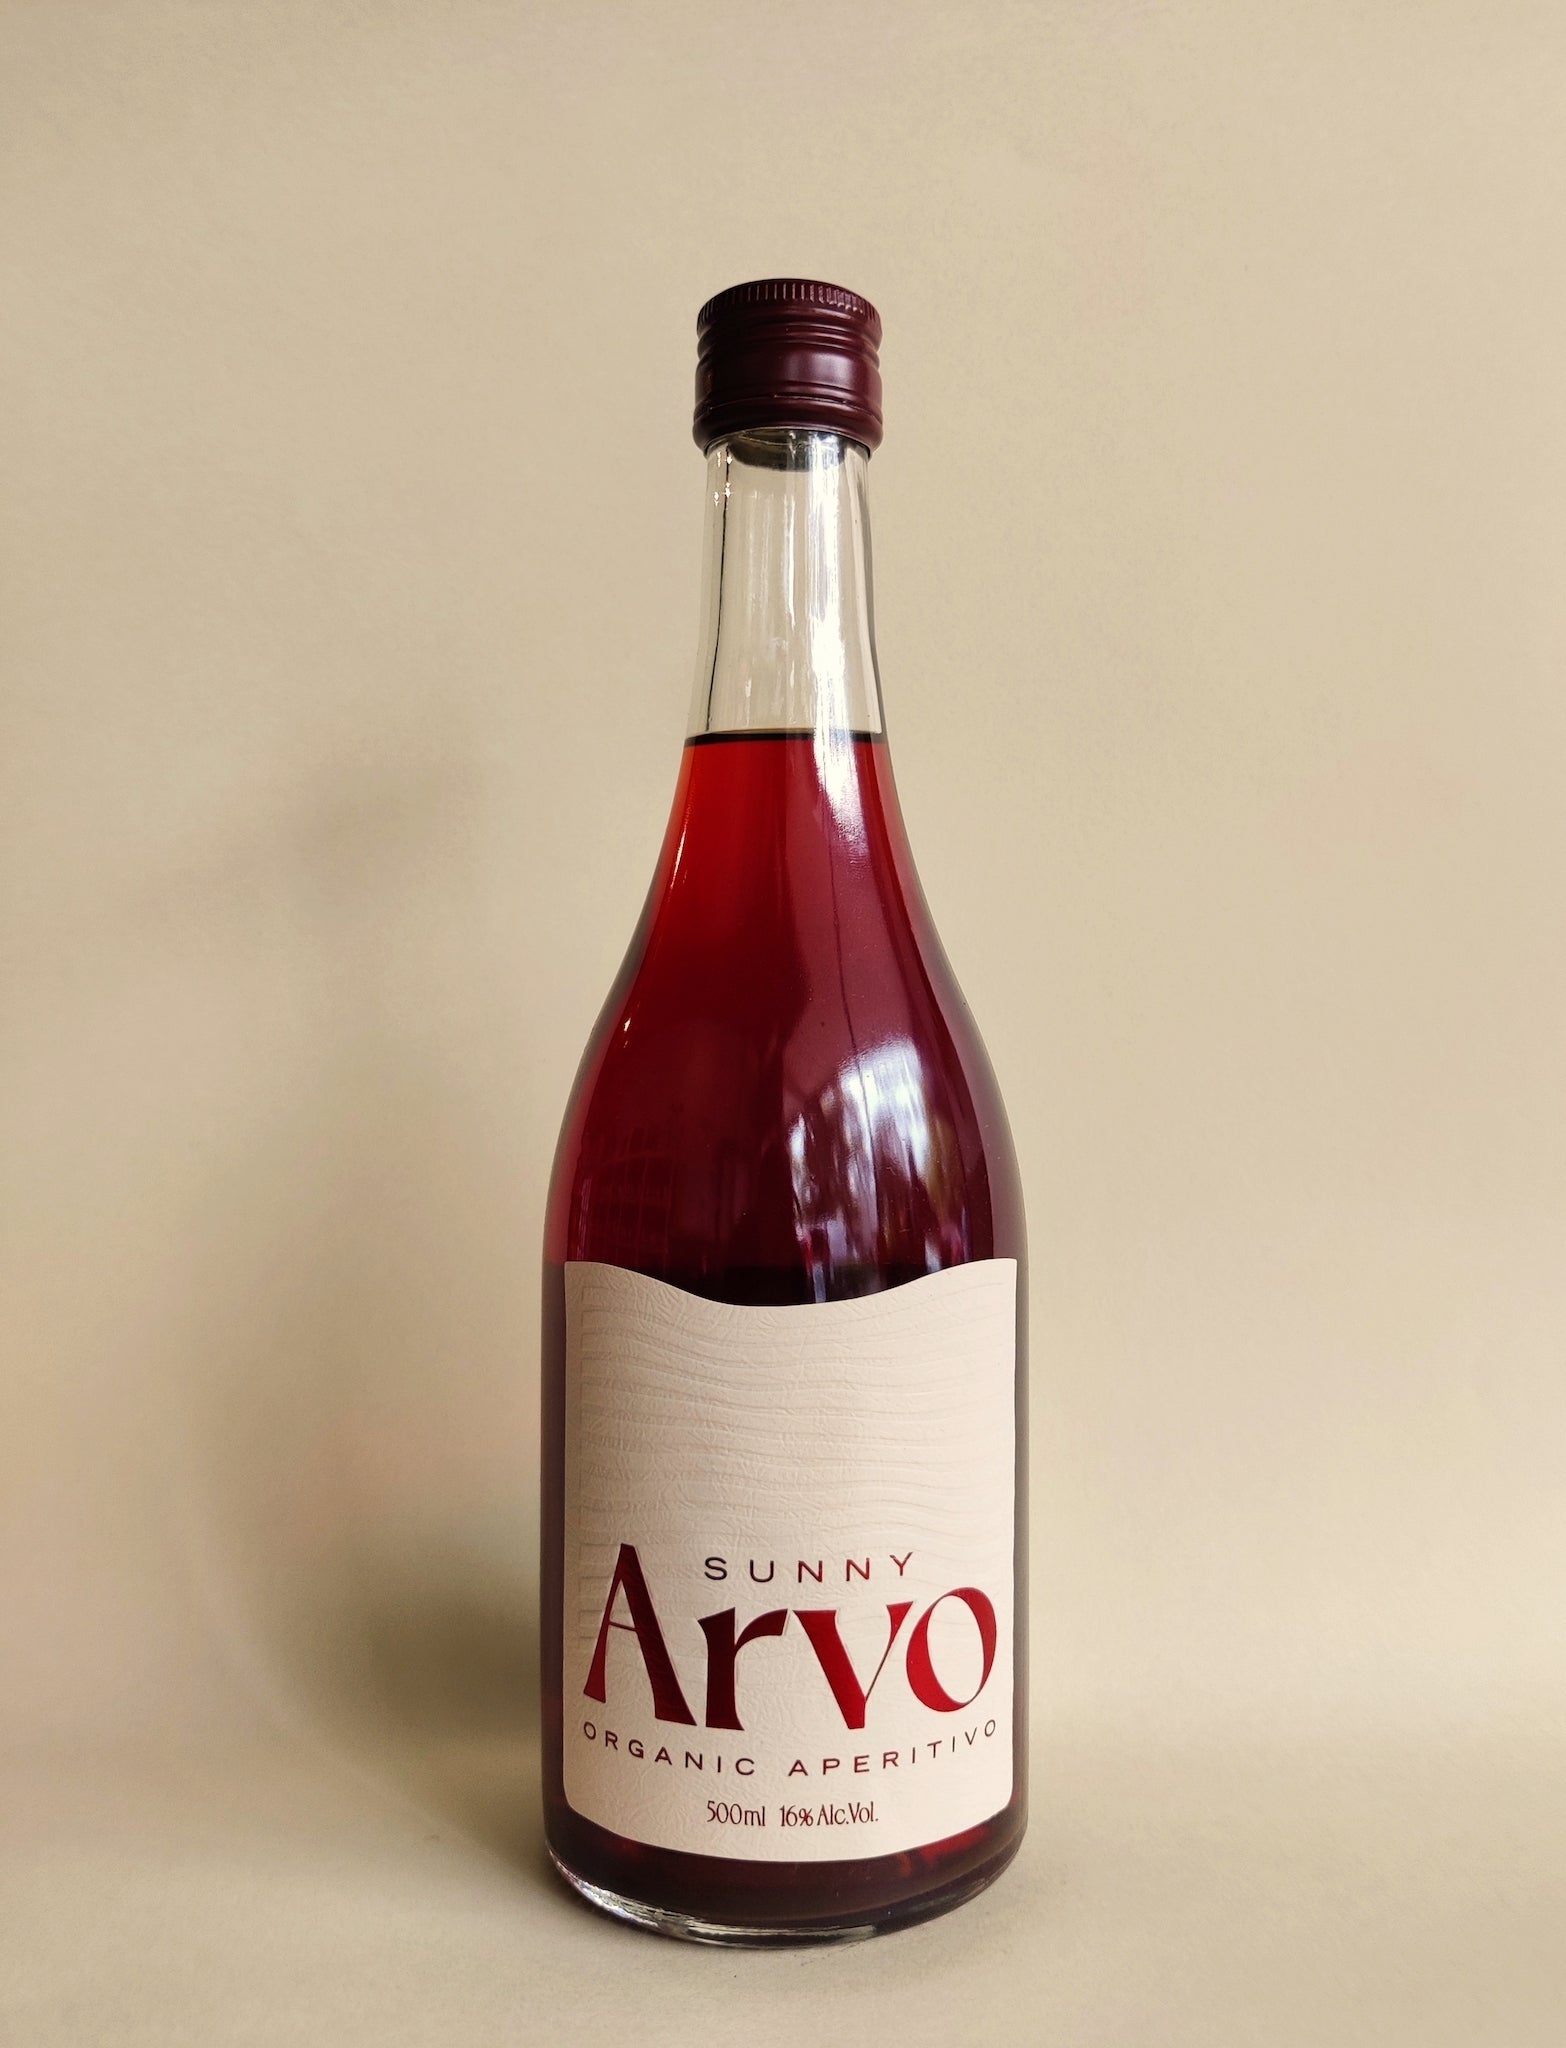 A bottle of Three Foxes Sunny Arvo Organic Aperitivo. 